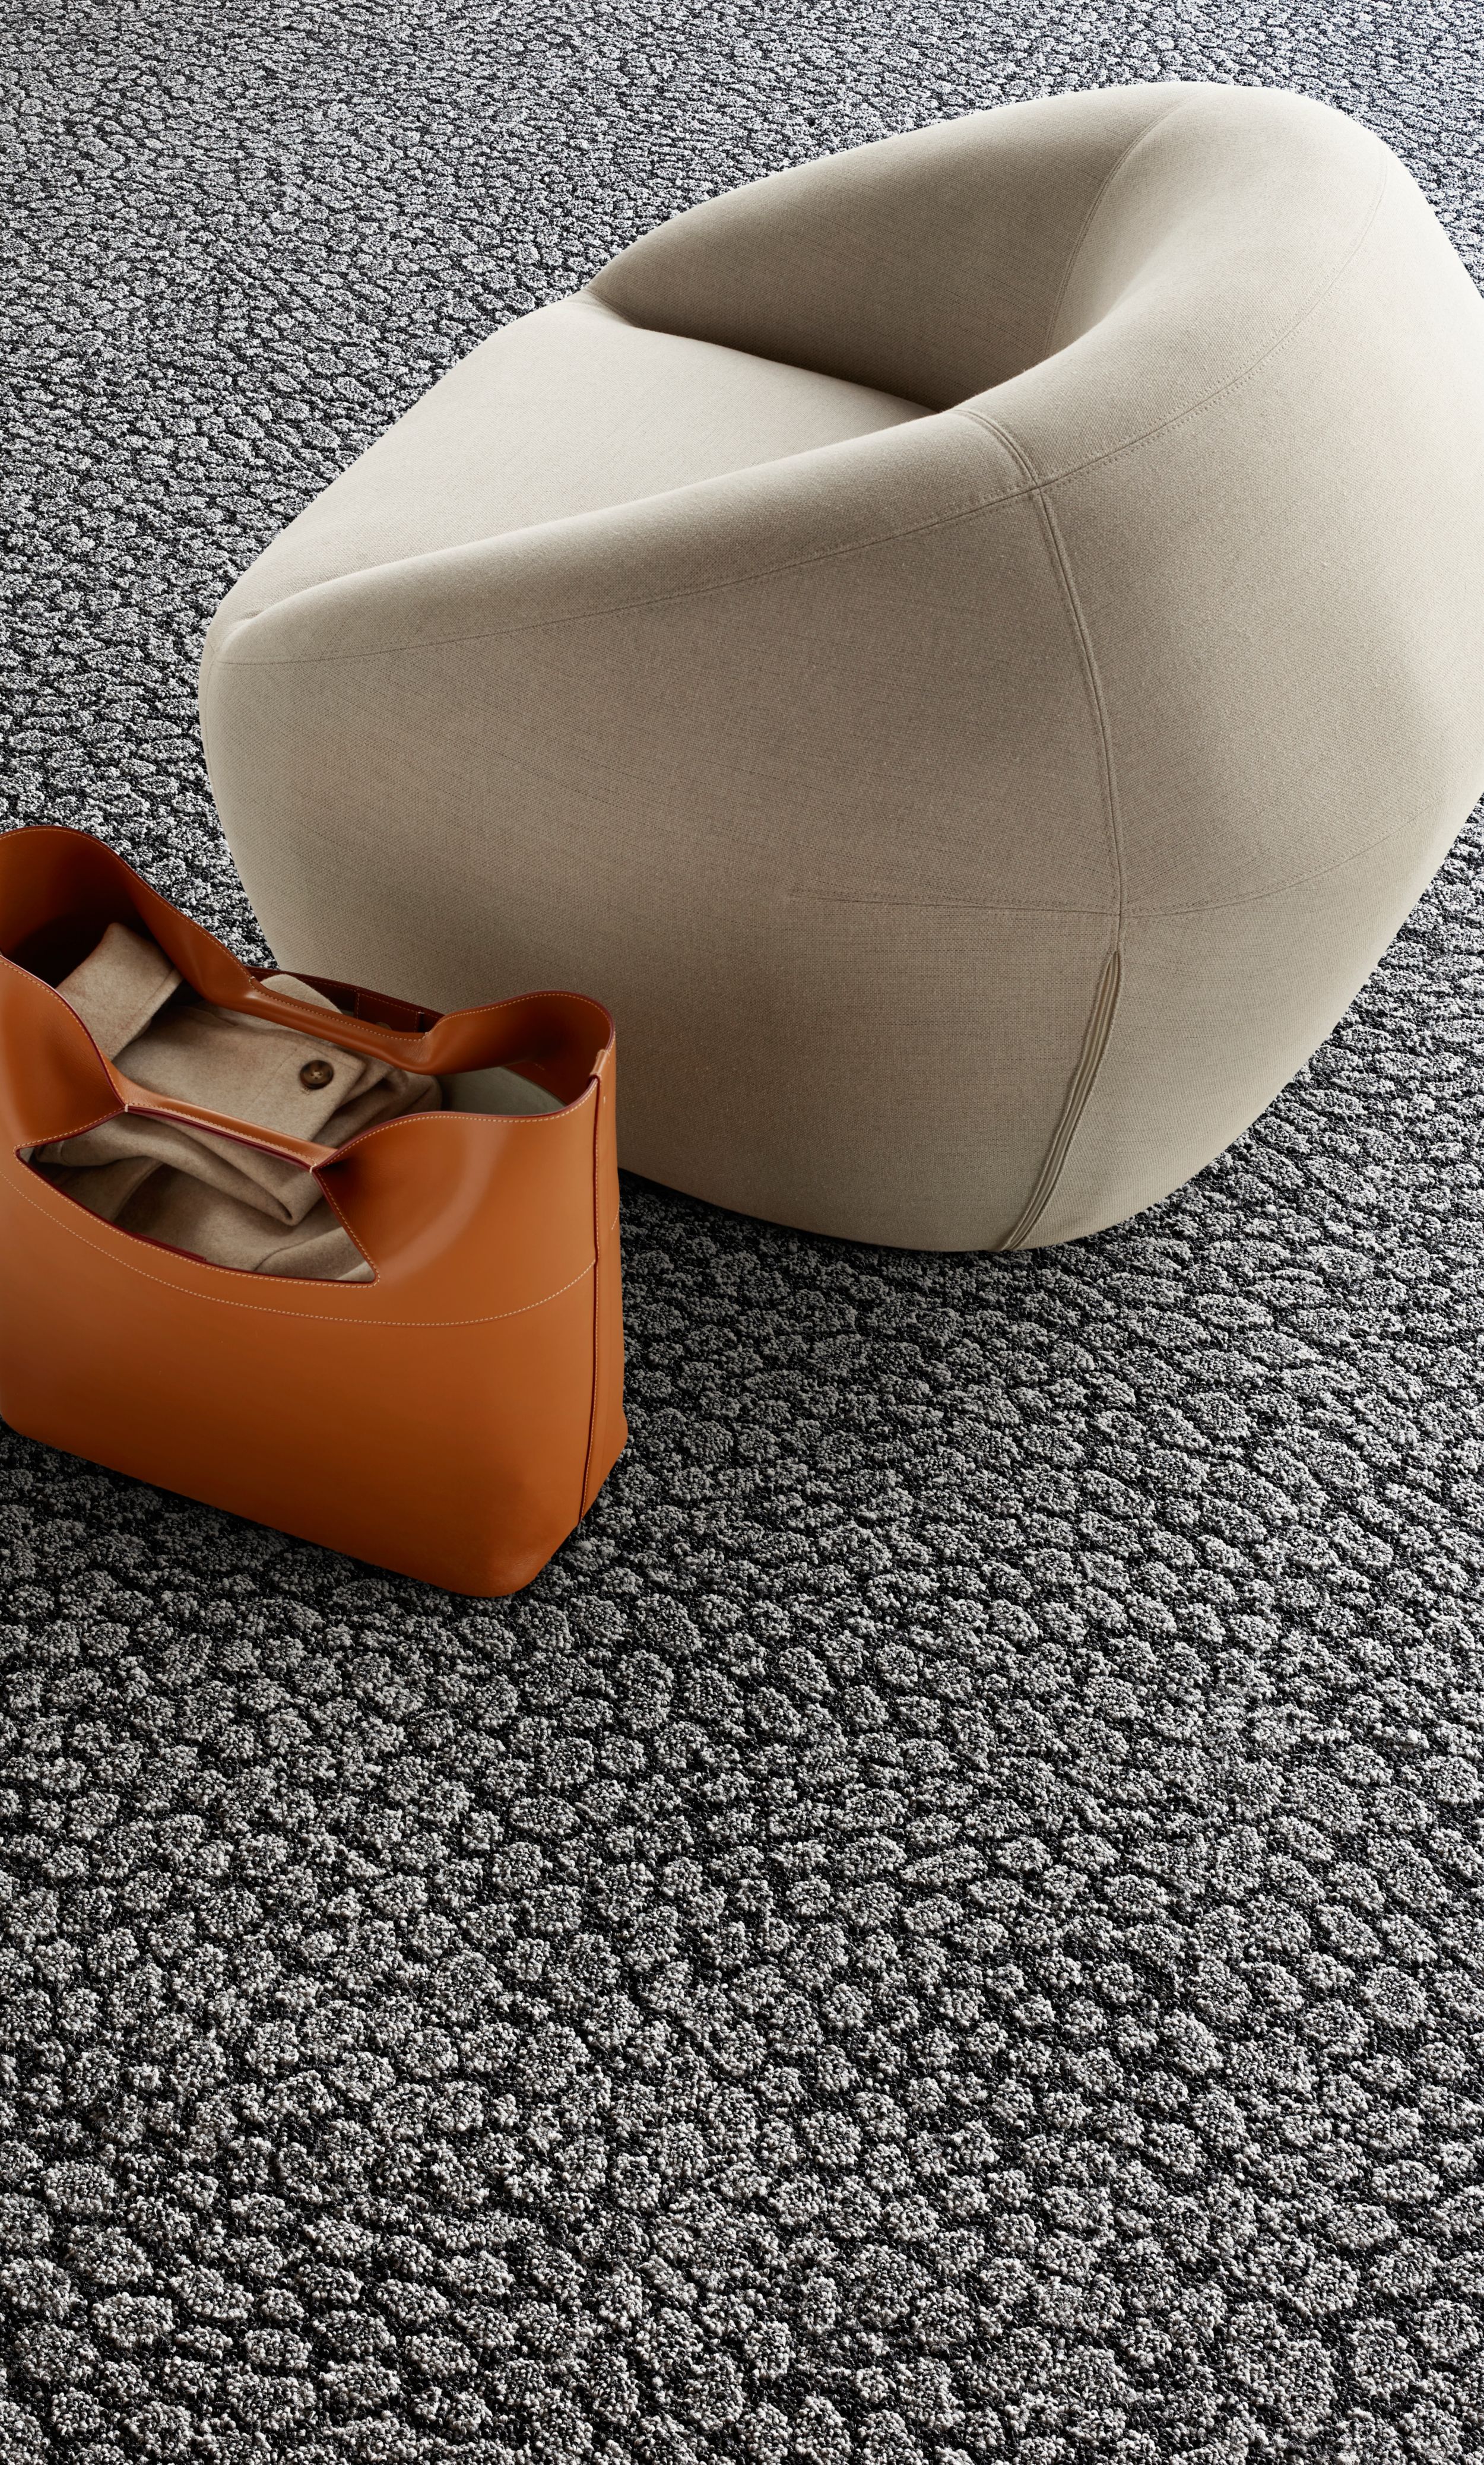 Interface E611 carpet tile detail with low chair and orange tote numéro d’image 2